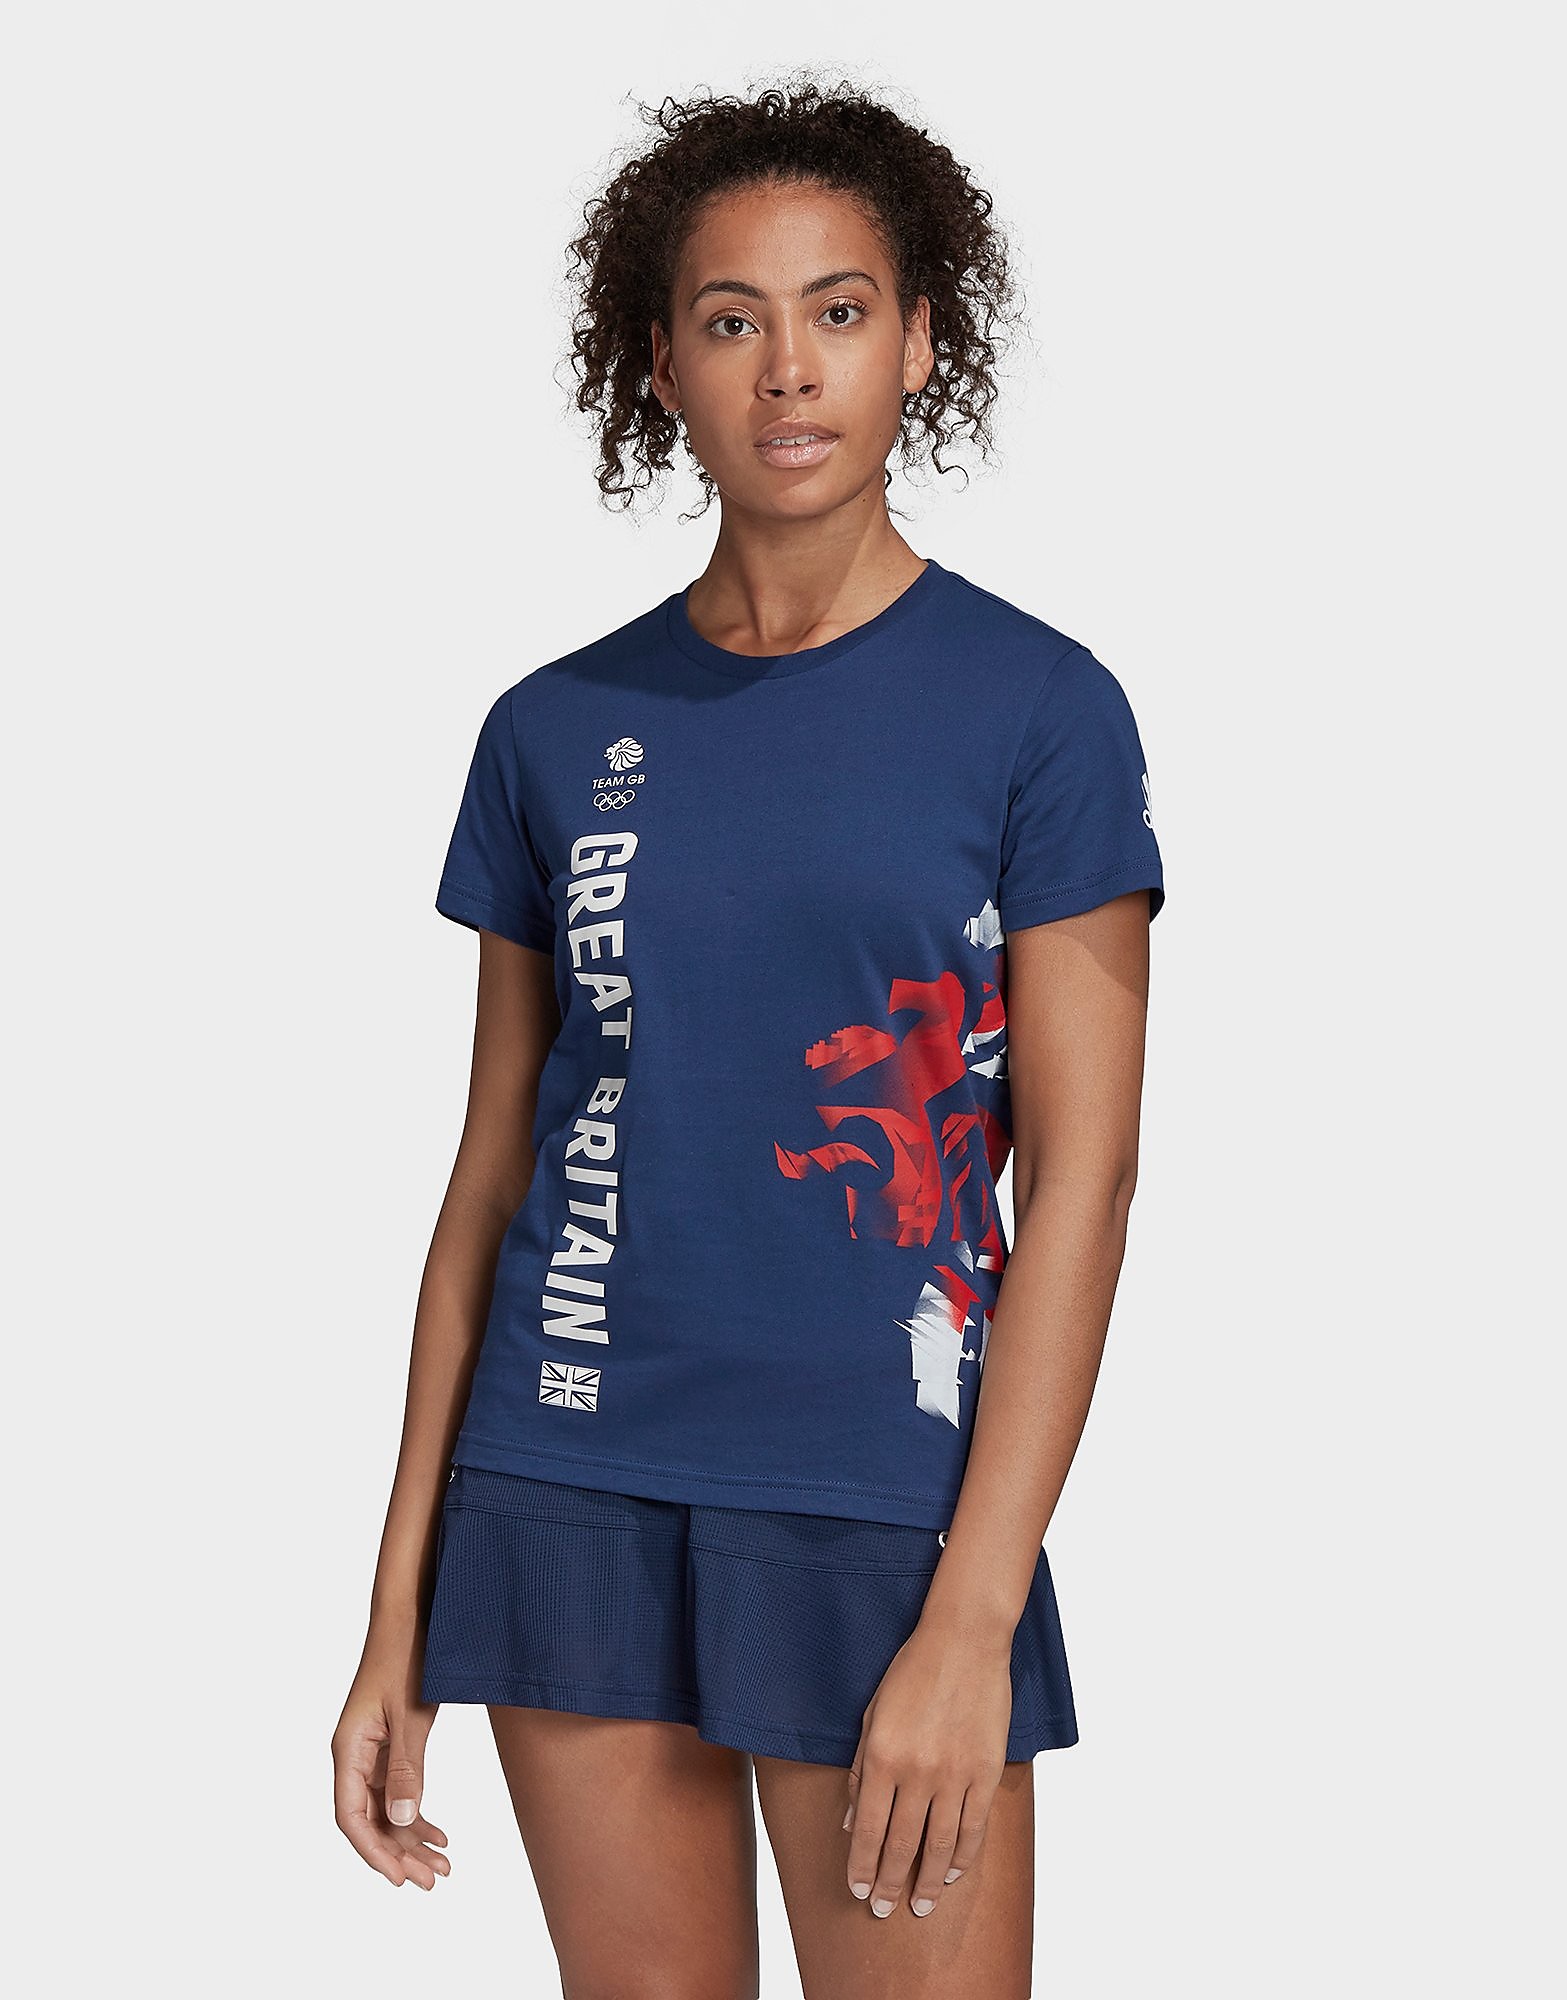 Adidas team gb olympics graphic t-shirt dam, blå